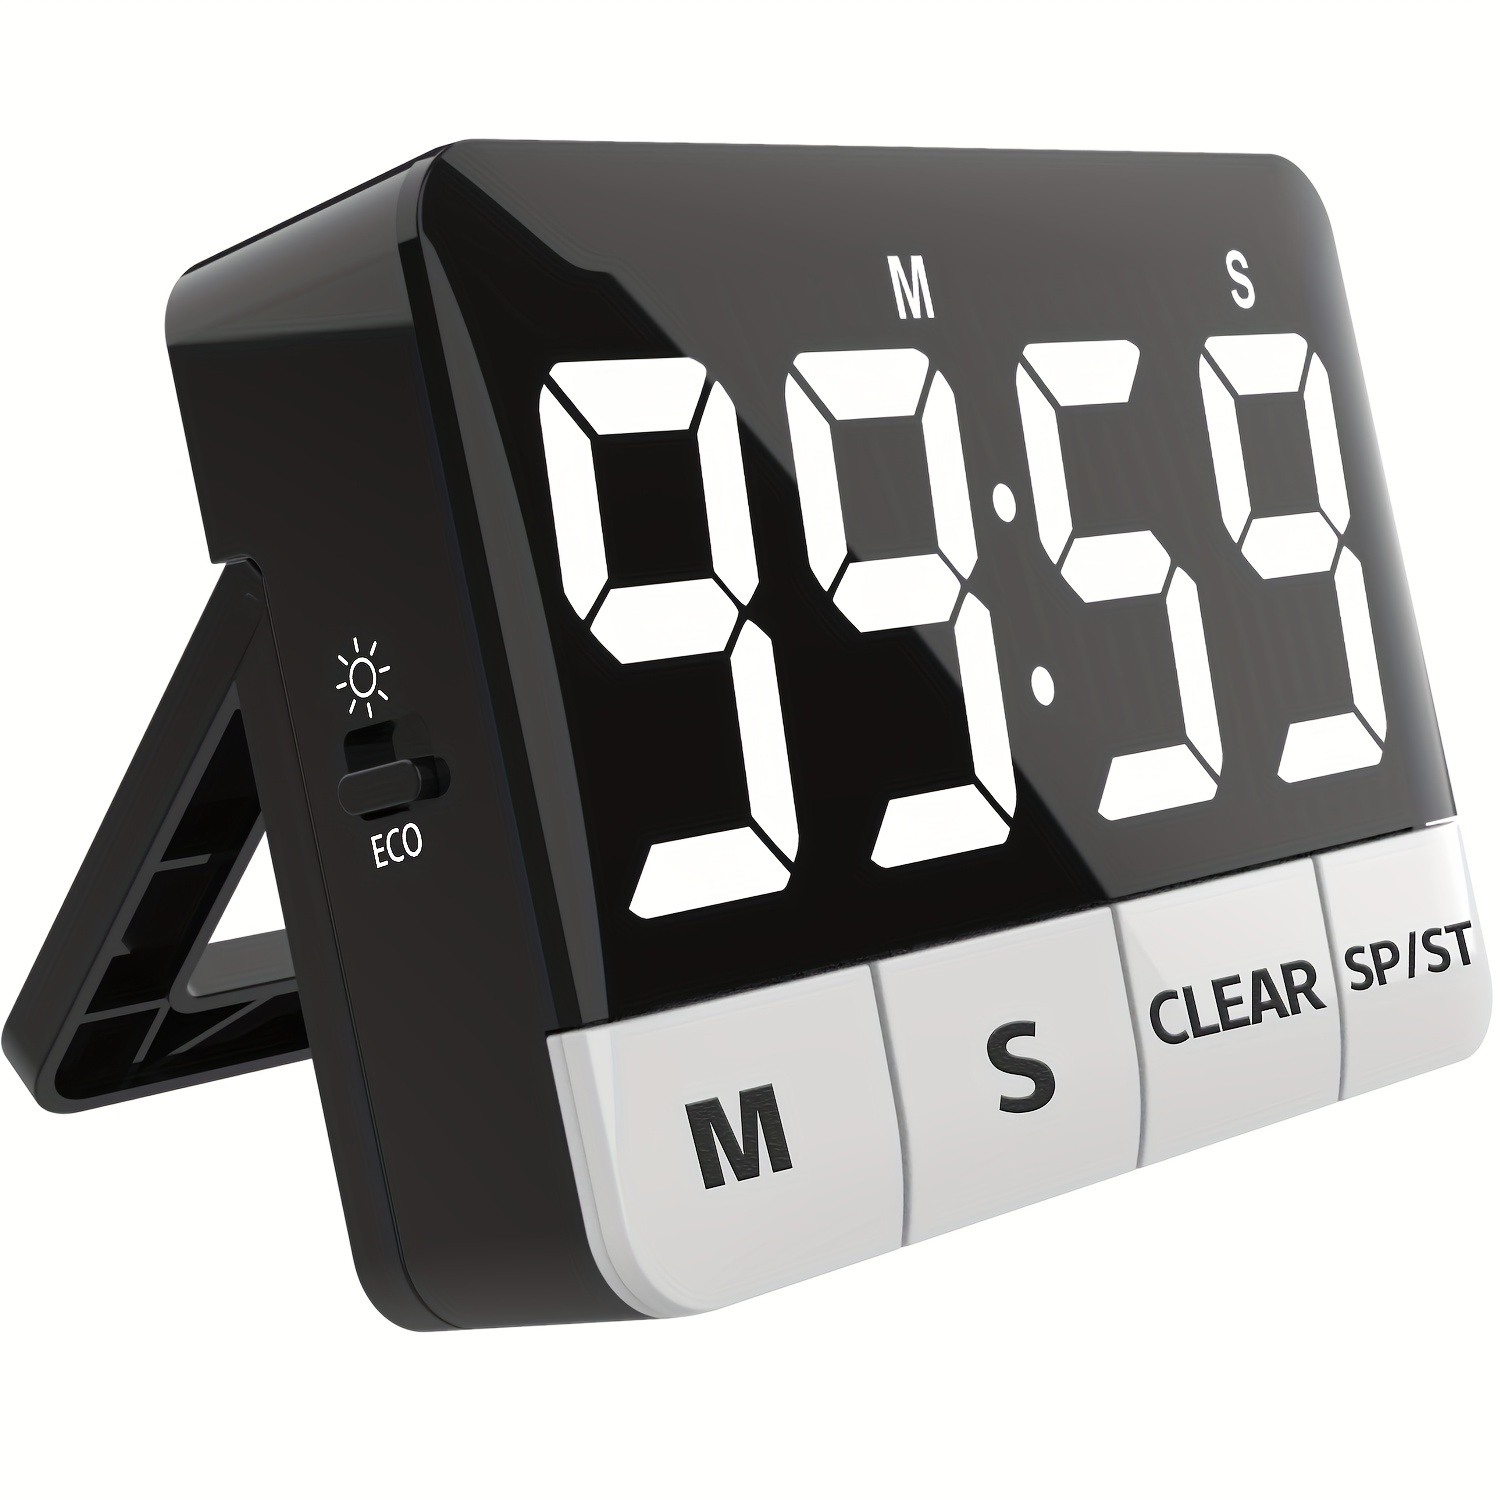 Portable Magnetic Gym Timer LED Display Digital Countdown